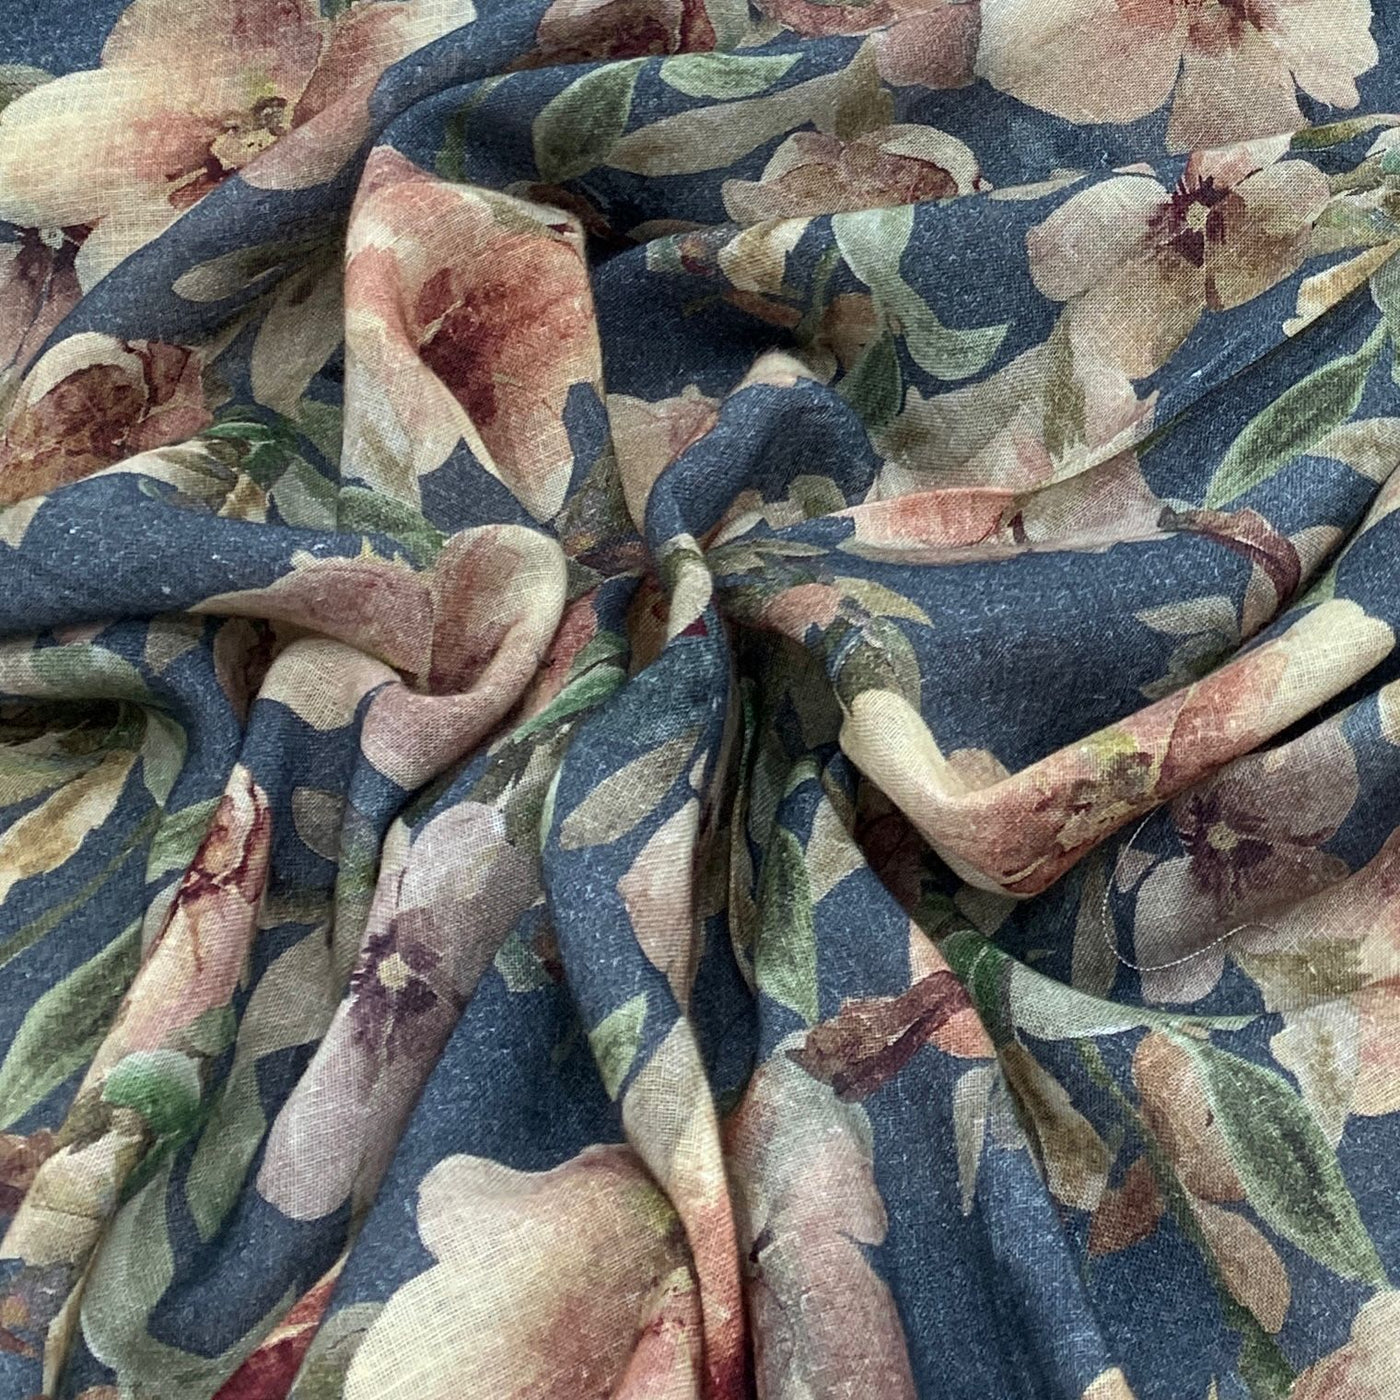 Pastel Blue Flower Design Linen Printed Fabric